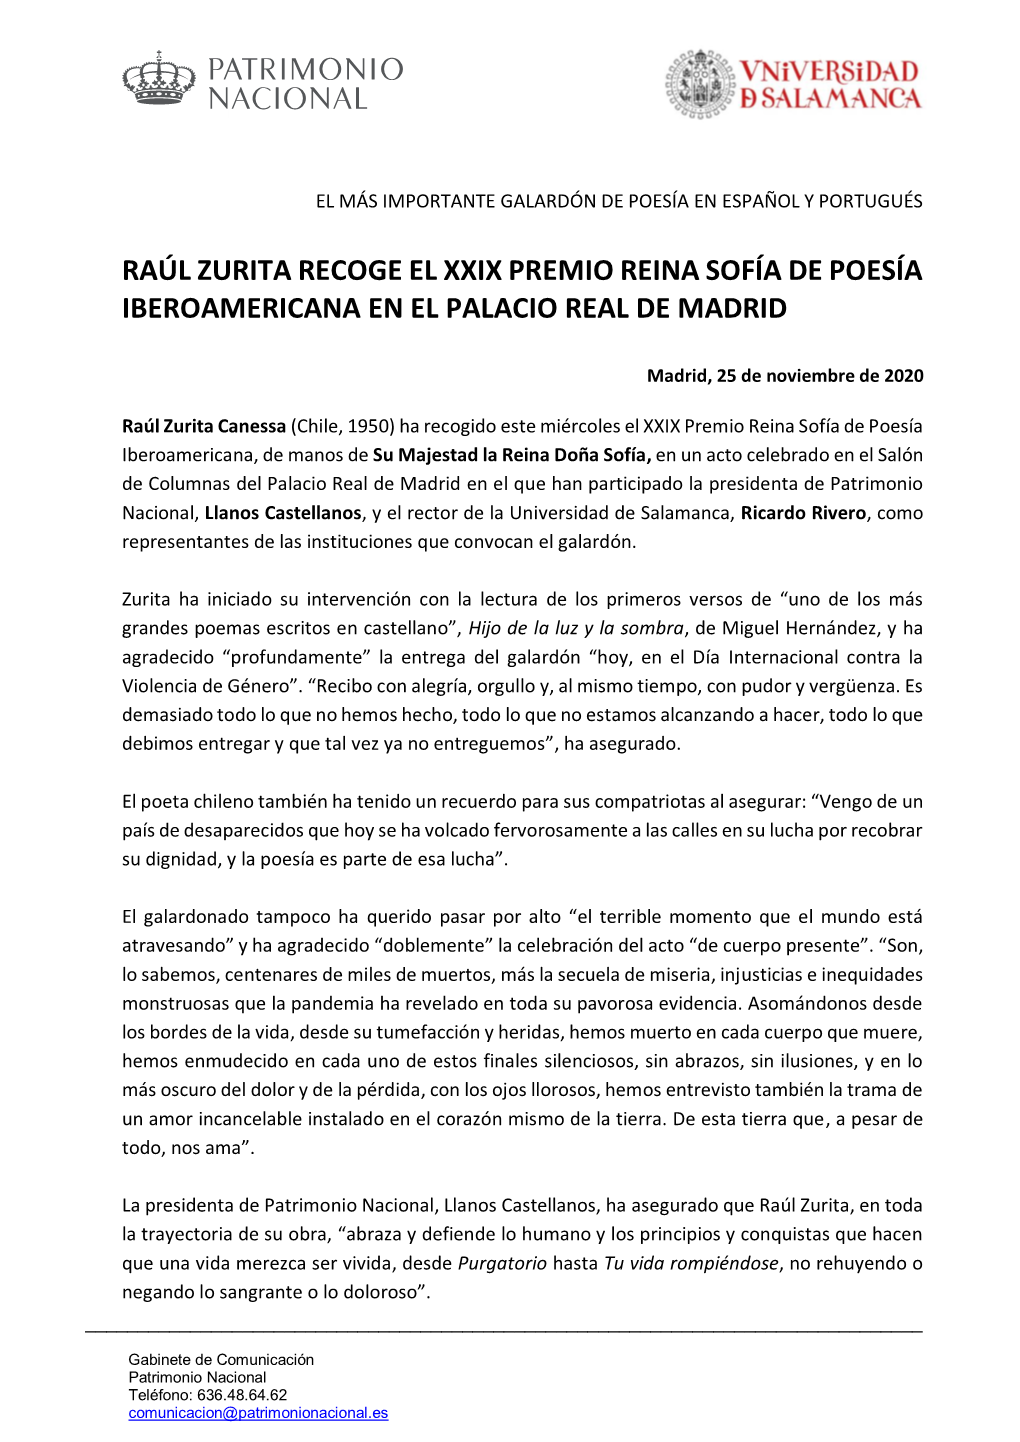 Raúl Zurita Recibe El Xxix Premio Reina Sofía De Poesía Iberoamericana En